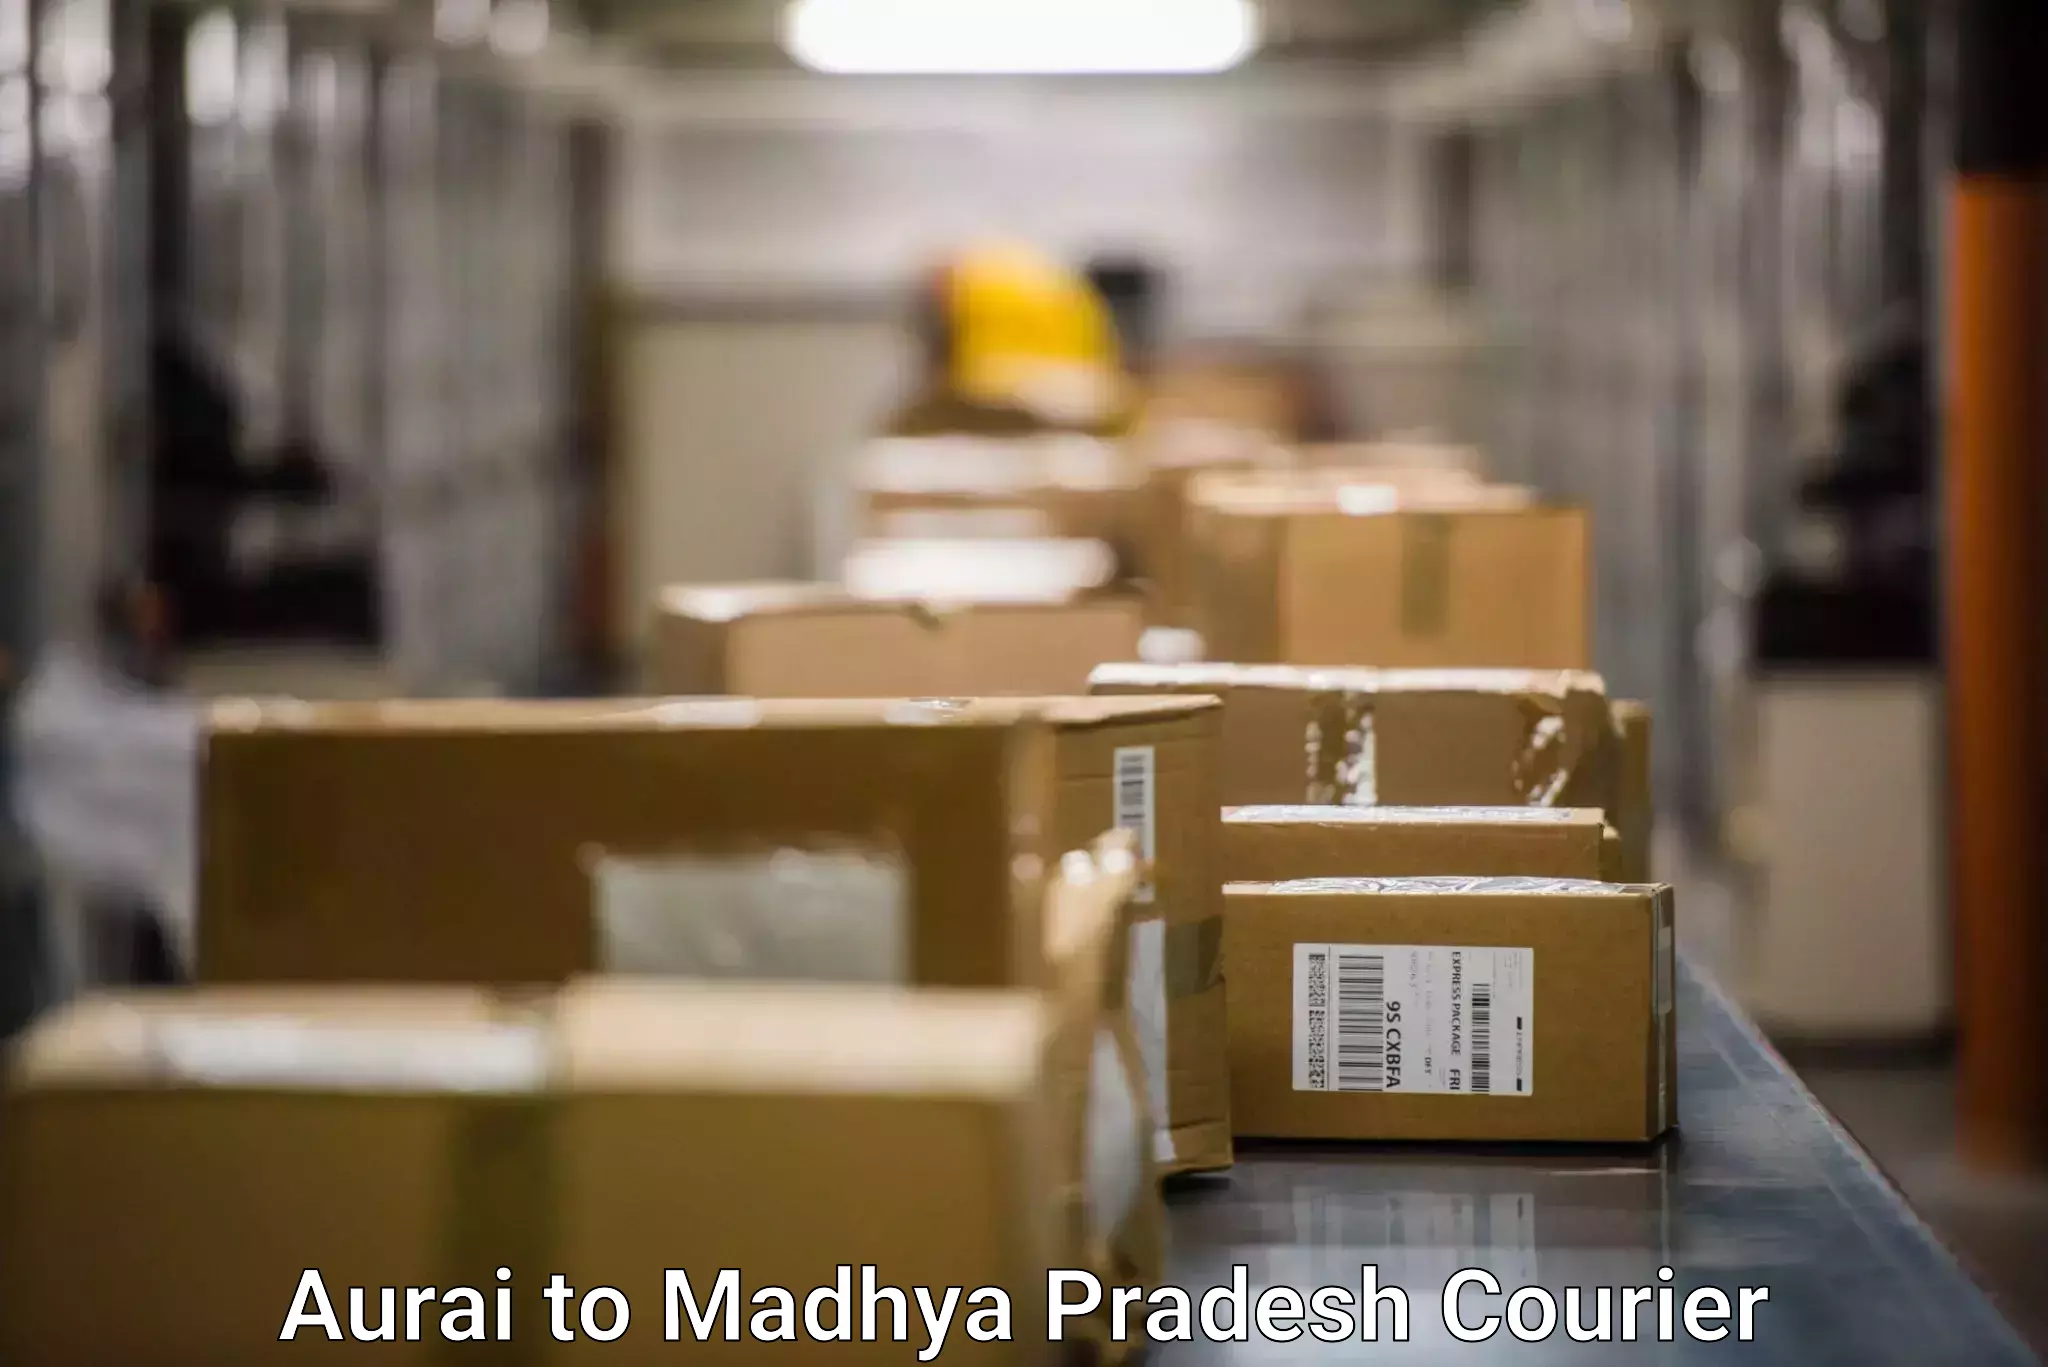 Digital courier platforms Aurai to Madhya Pradesh